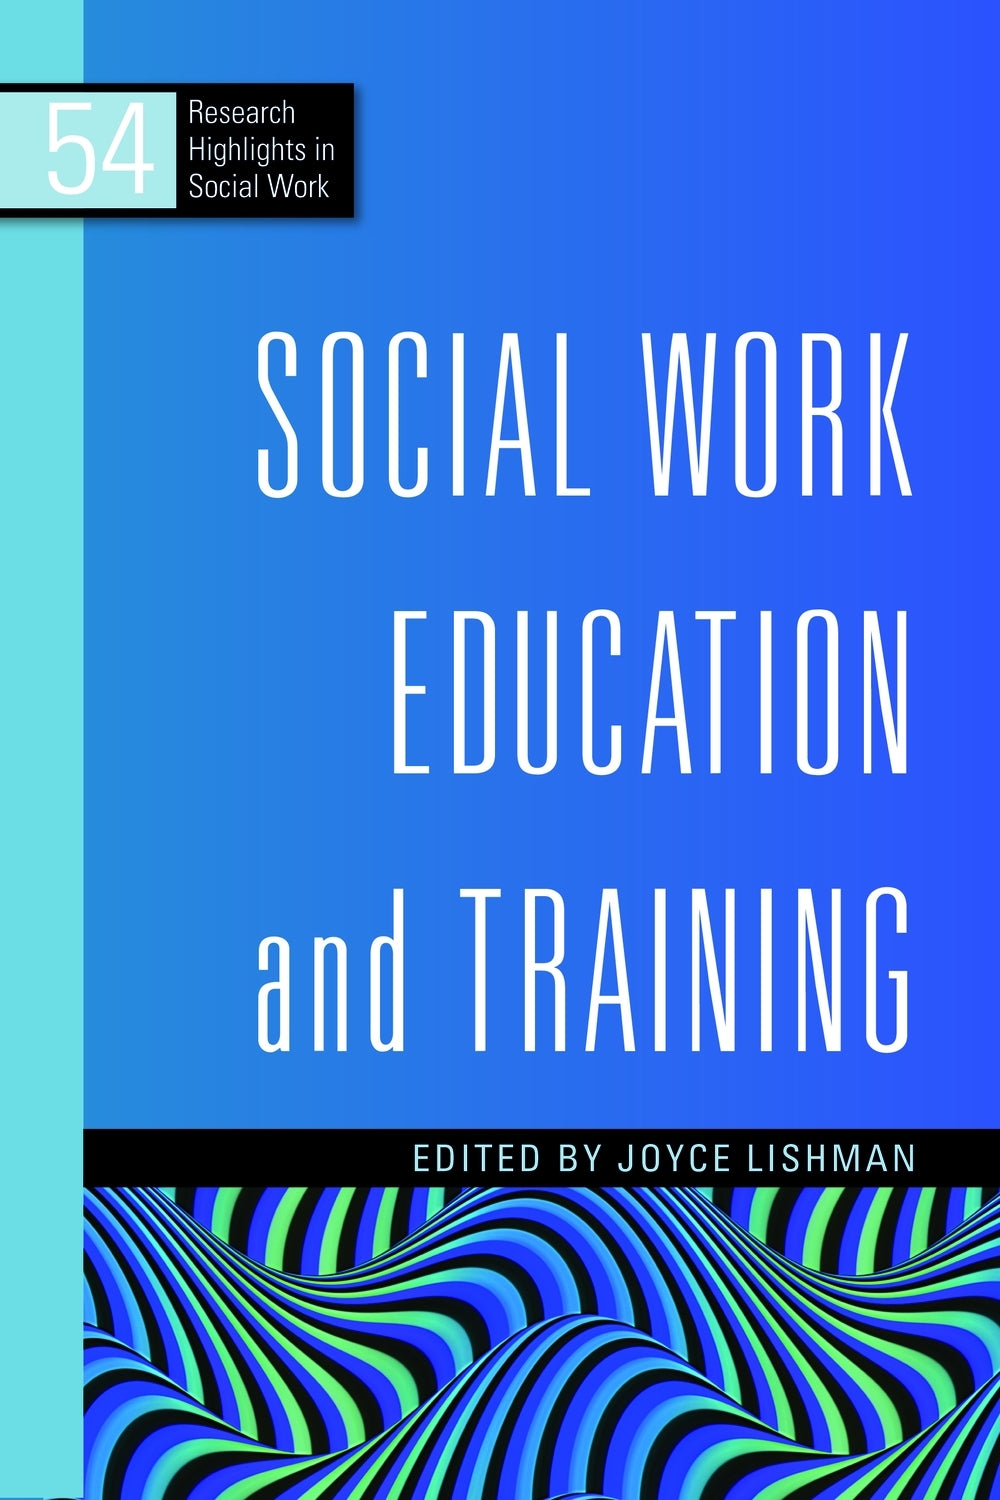 Social Work Education and Training by Joyce Lishman